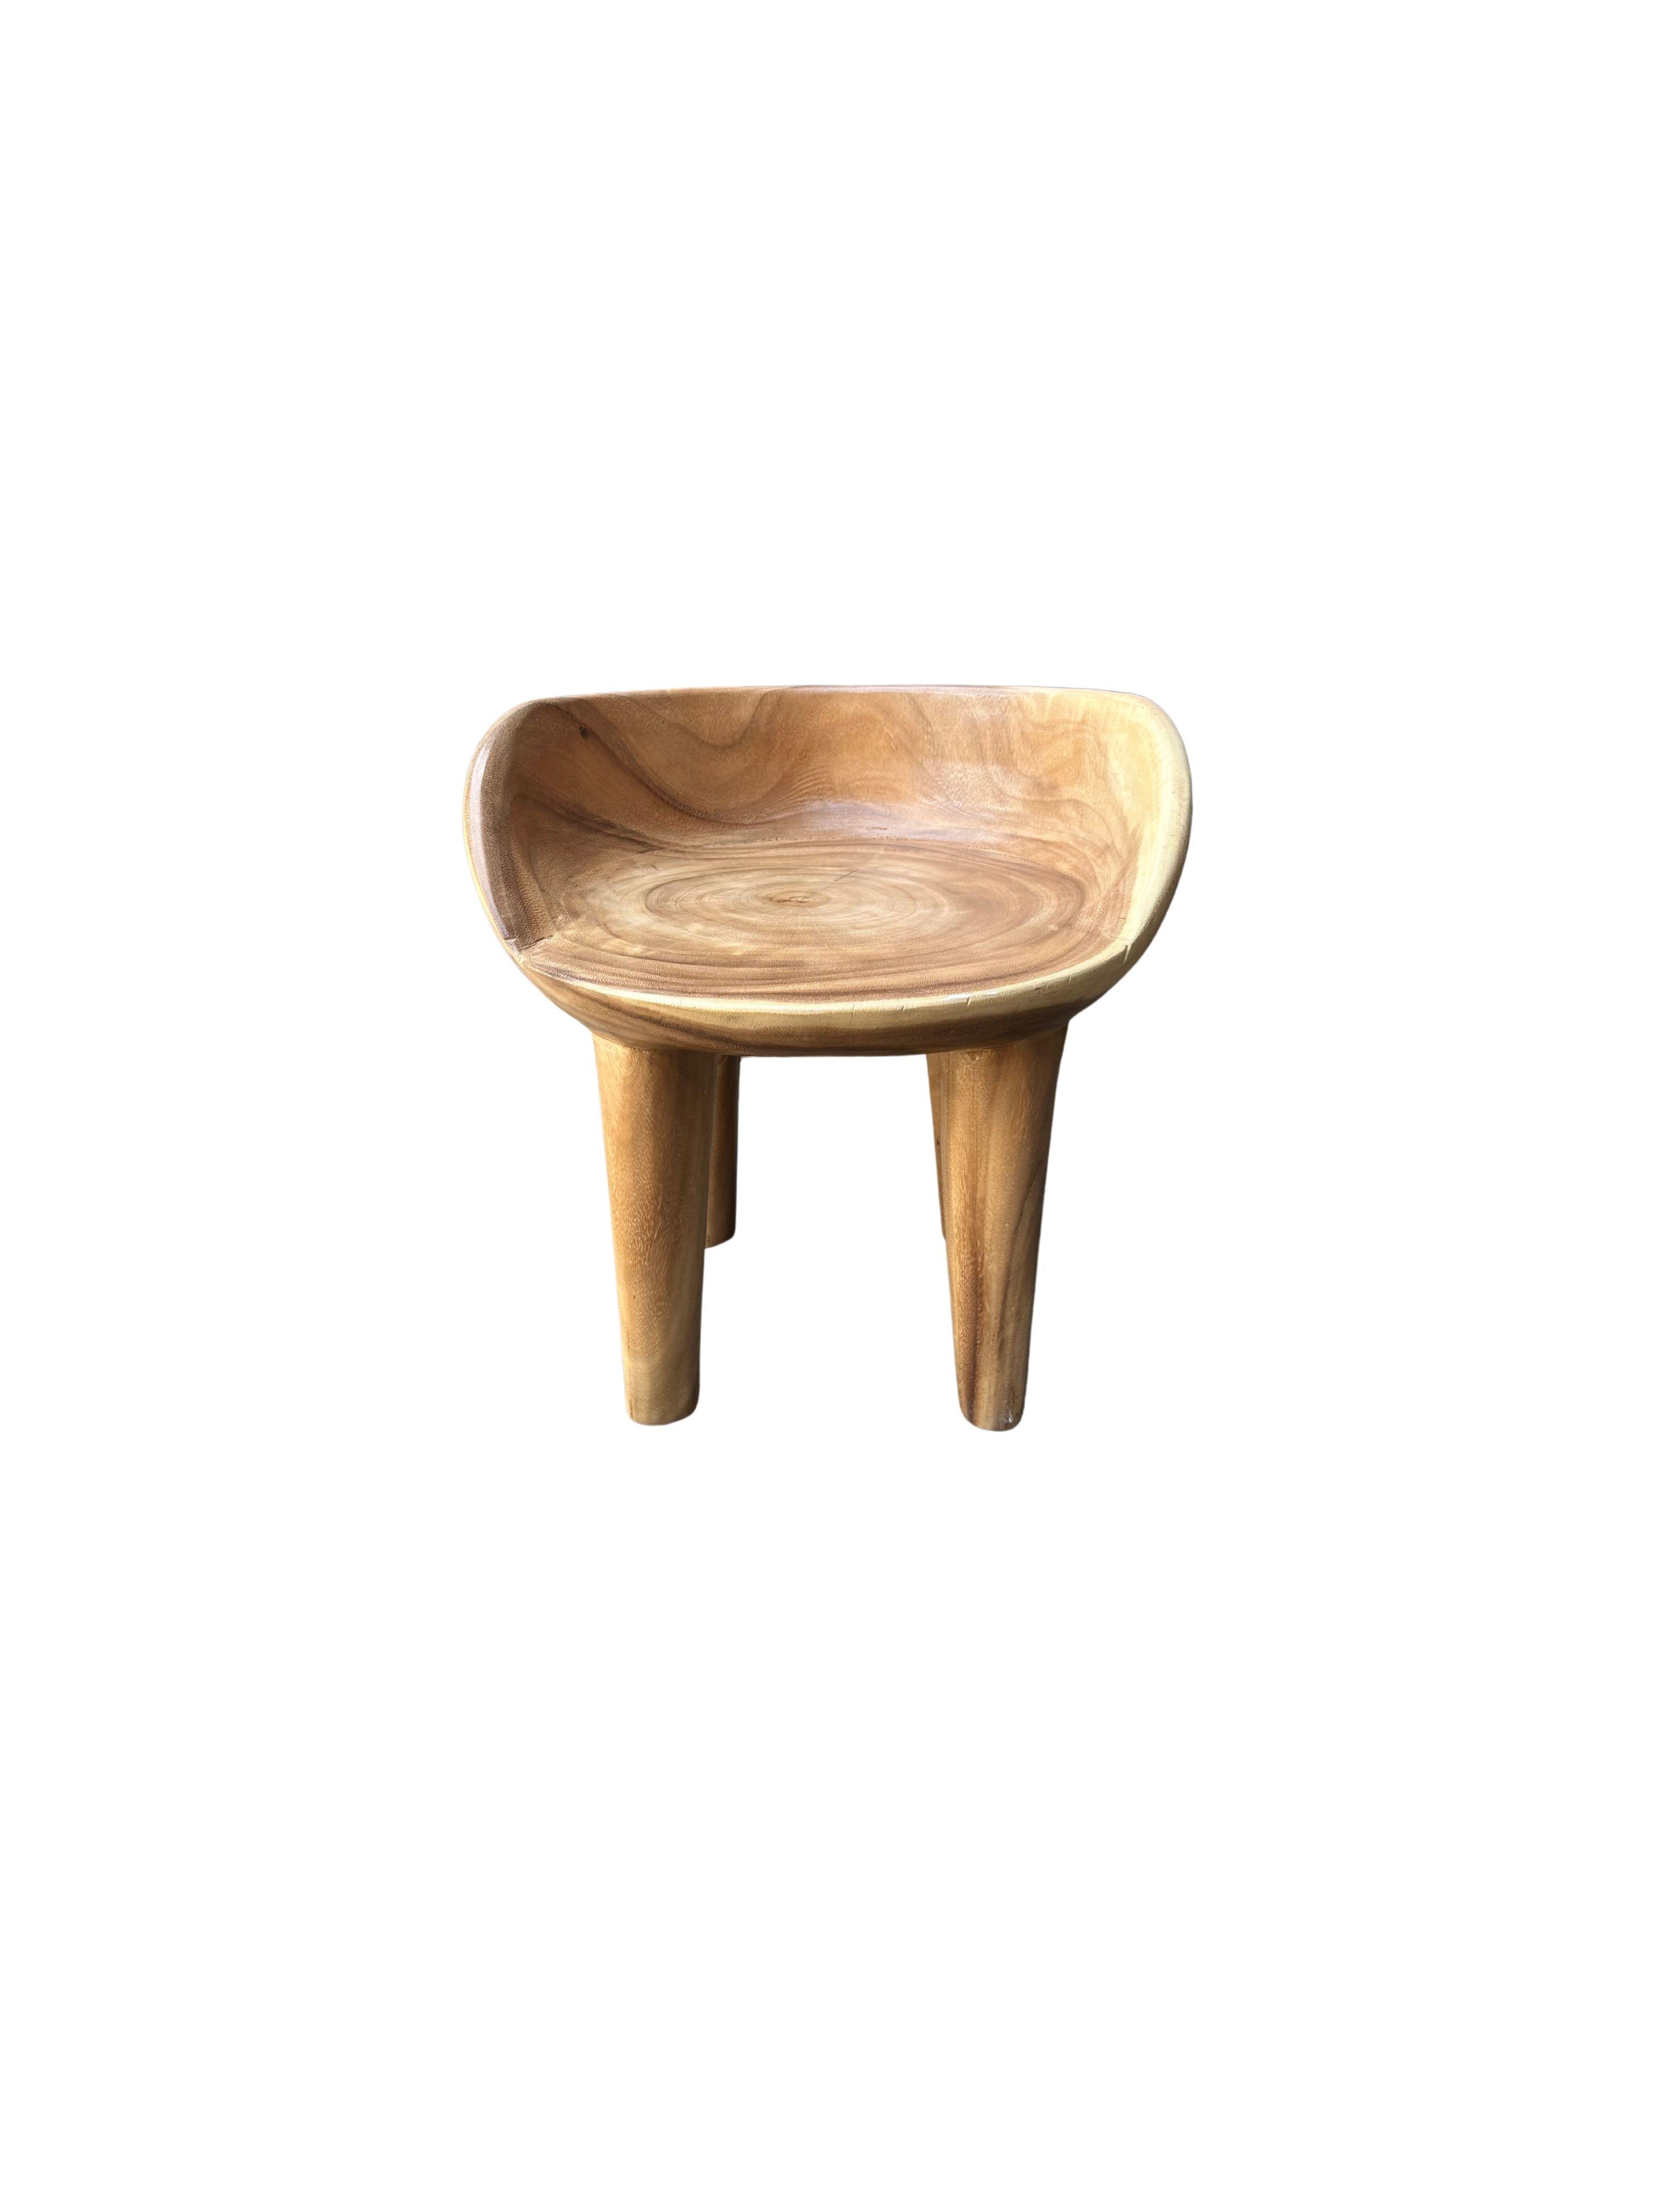 Organic Modern Sculptural Suar Wood Chair Modern Organic For Sale